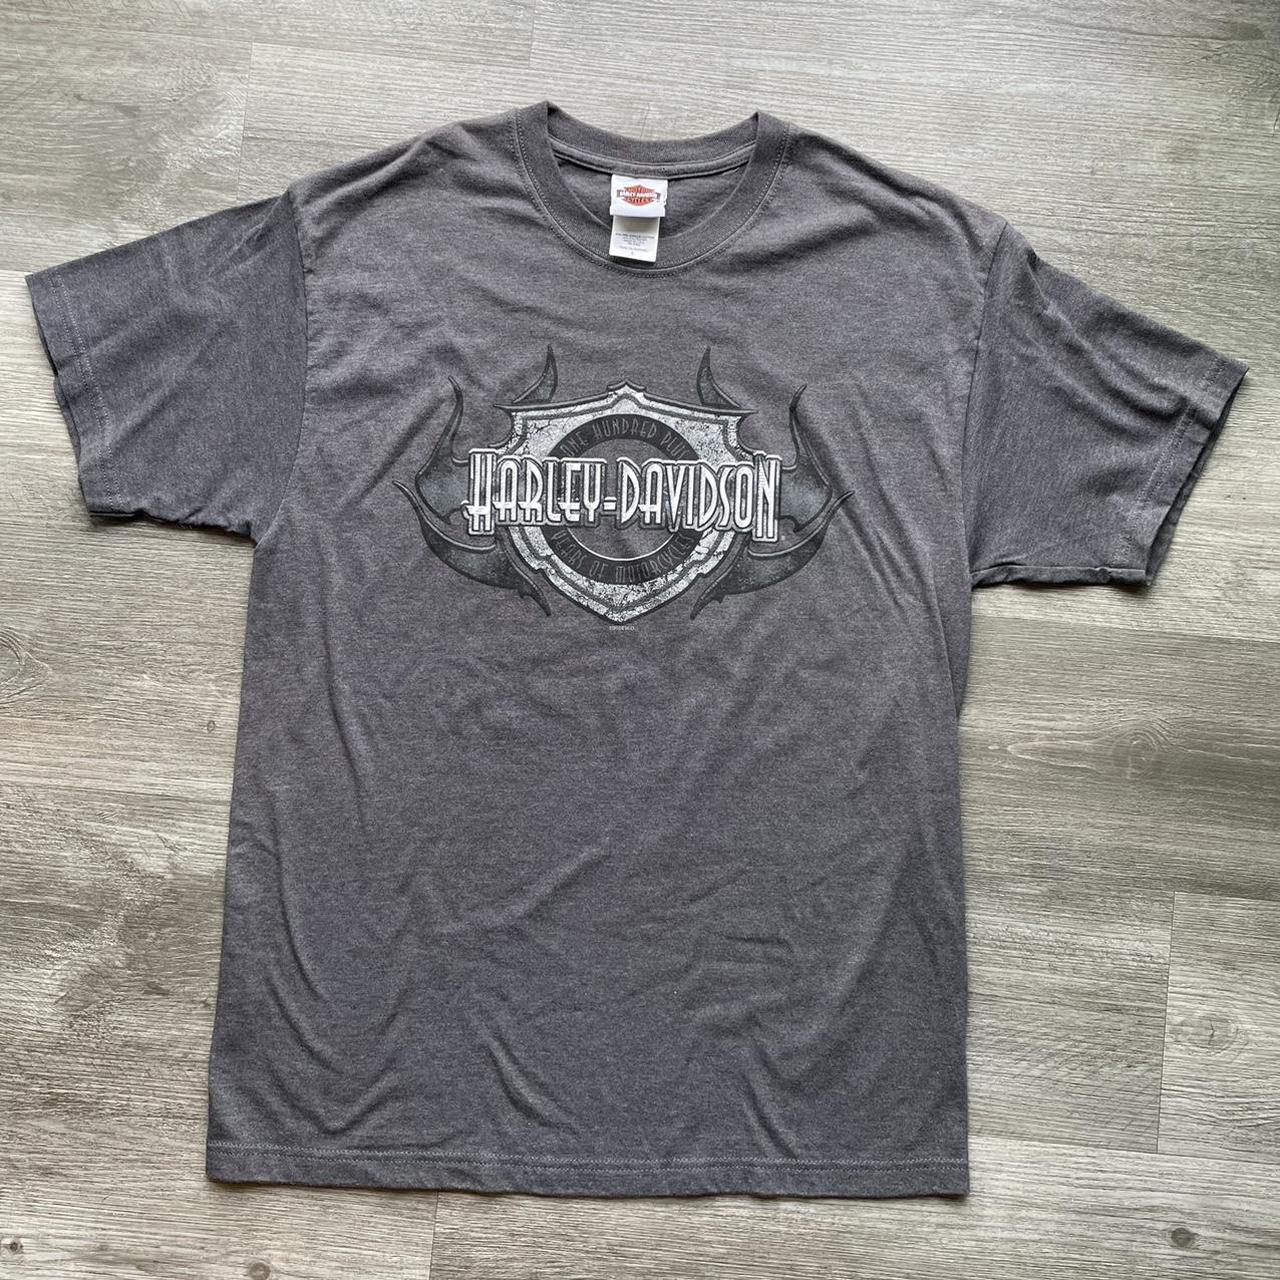 Harley Davidson Harbor City California Shirt Good... - Depop